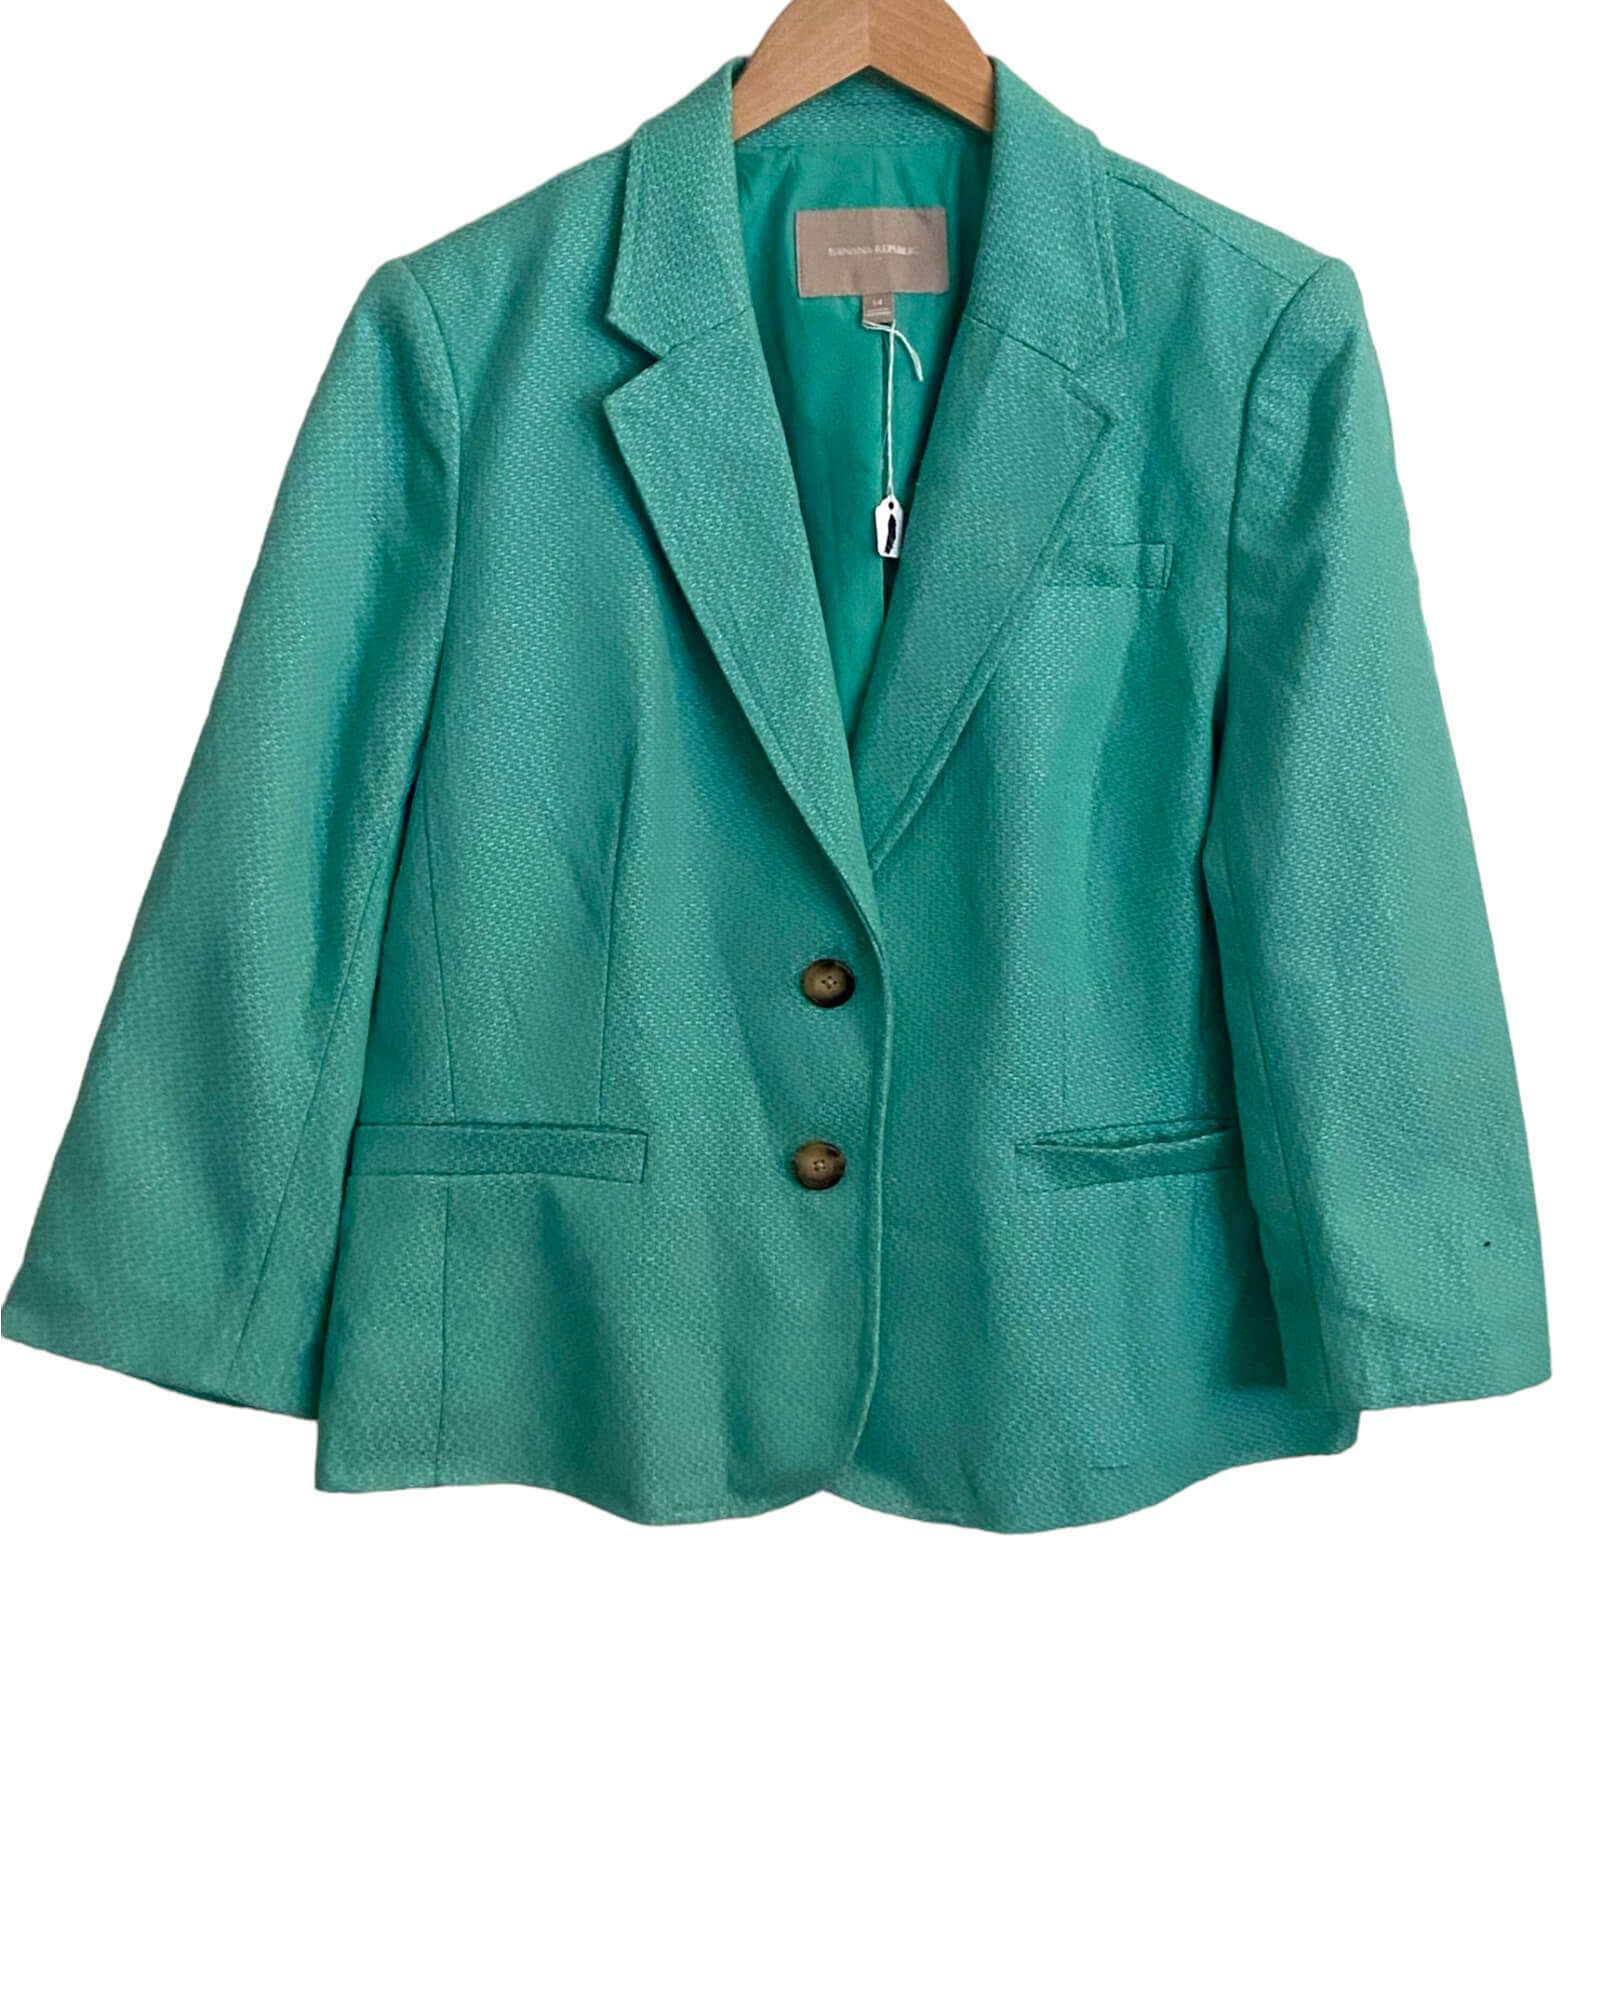 Warm Spring BANANA REPUBLIC lucite green tweed blazer